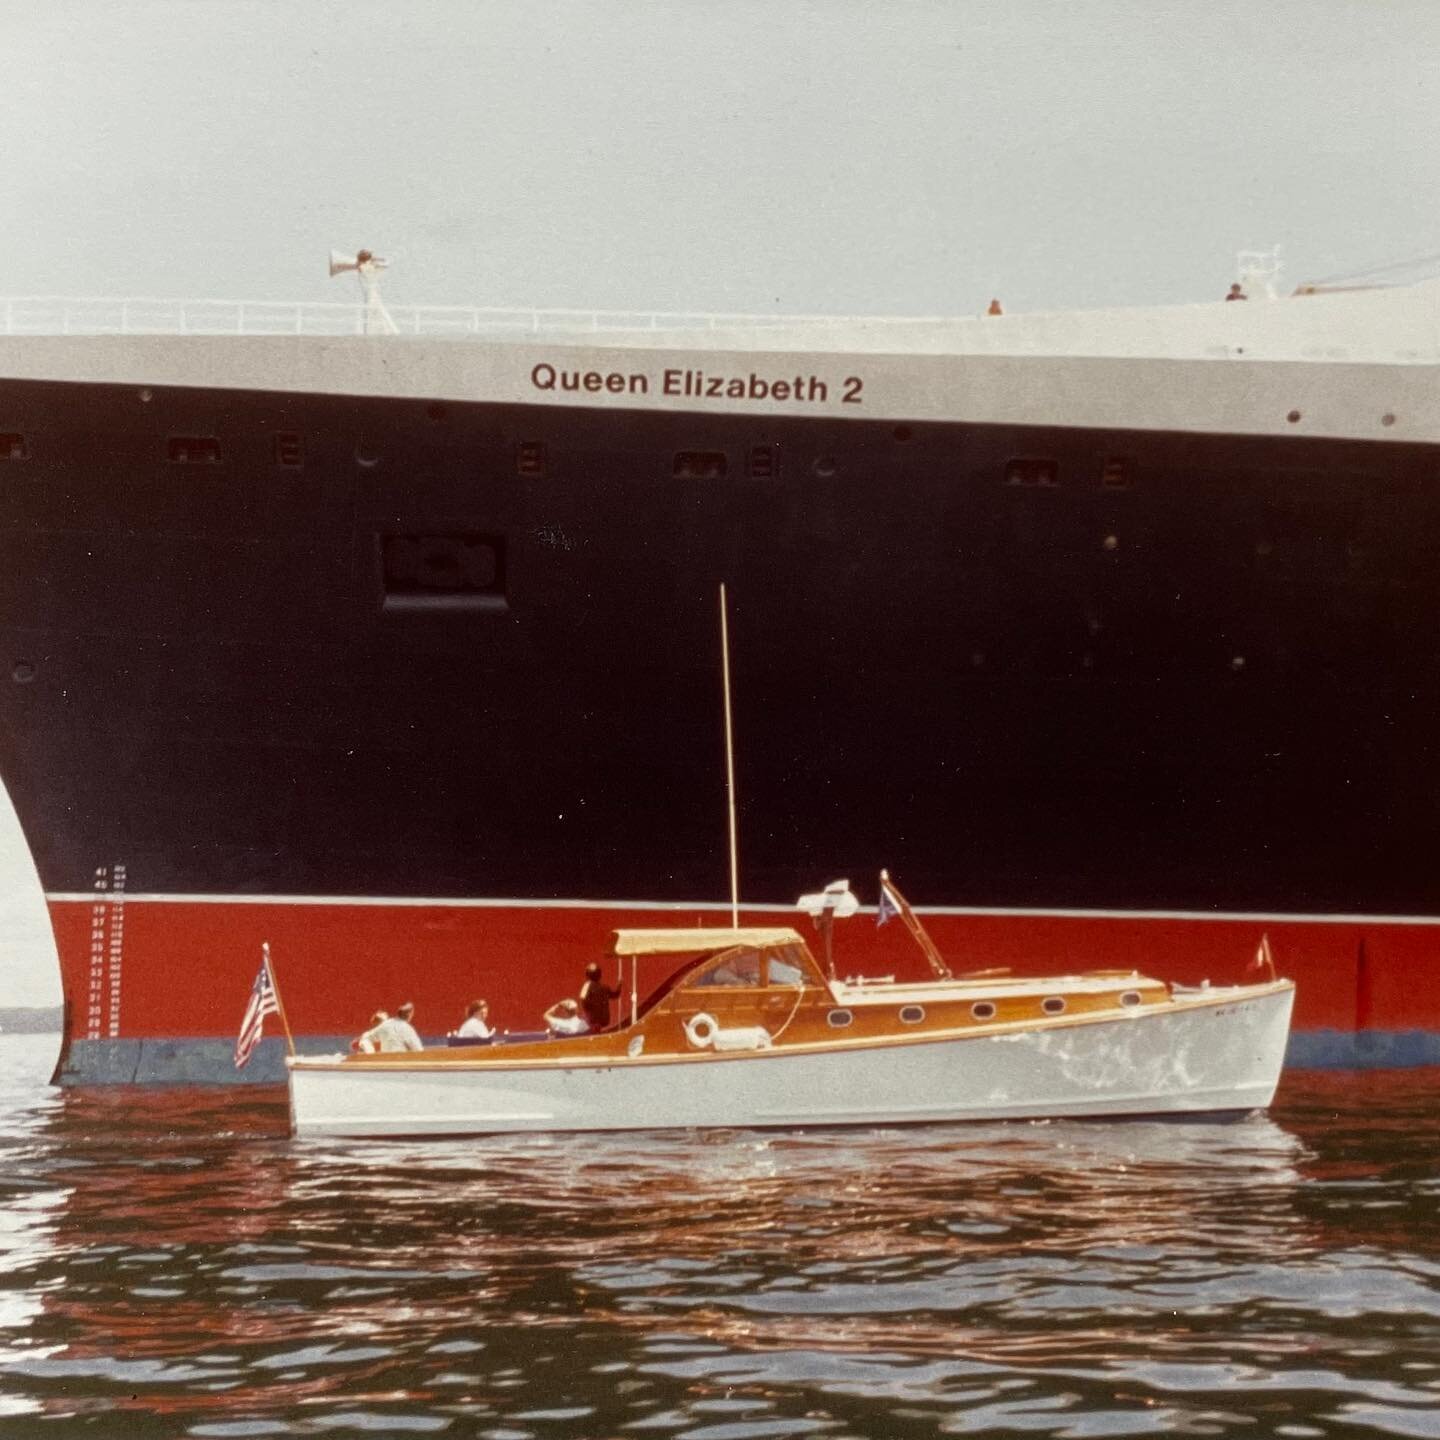 #TBT to 1982. Photo cred @cgatesscott 
.
.
.
.
#maineboats #bunkerandellis #woodenboats